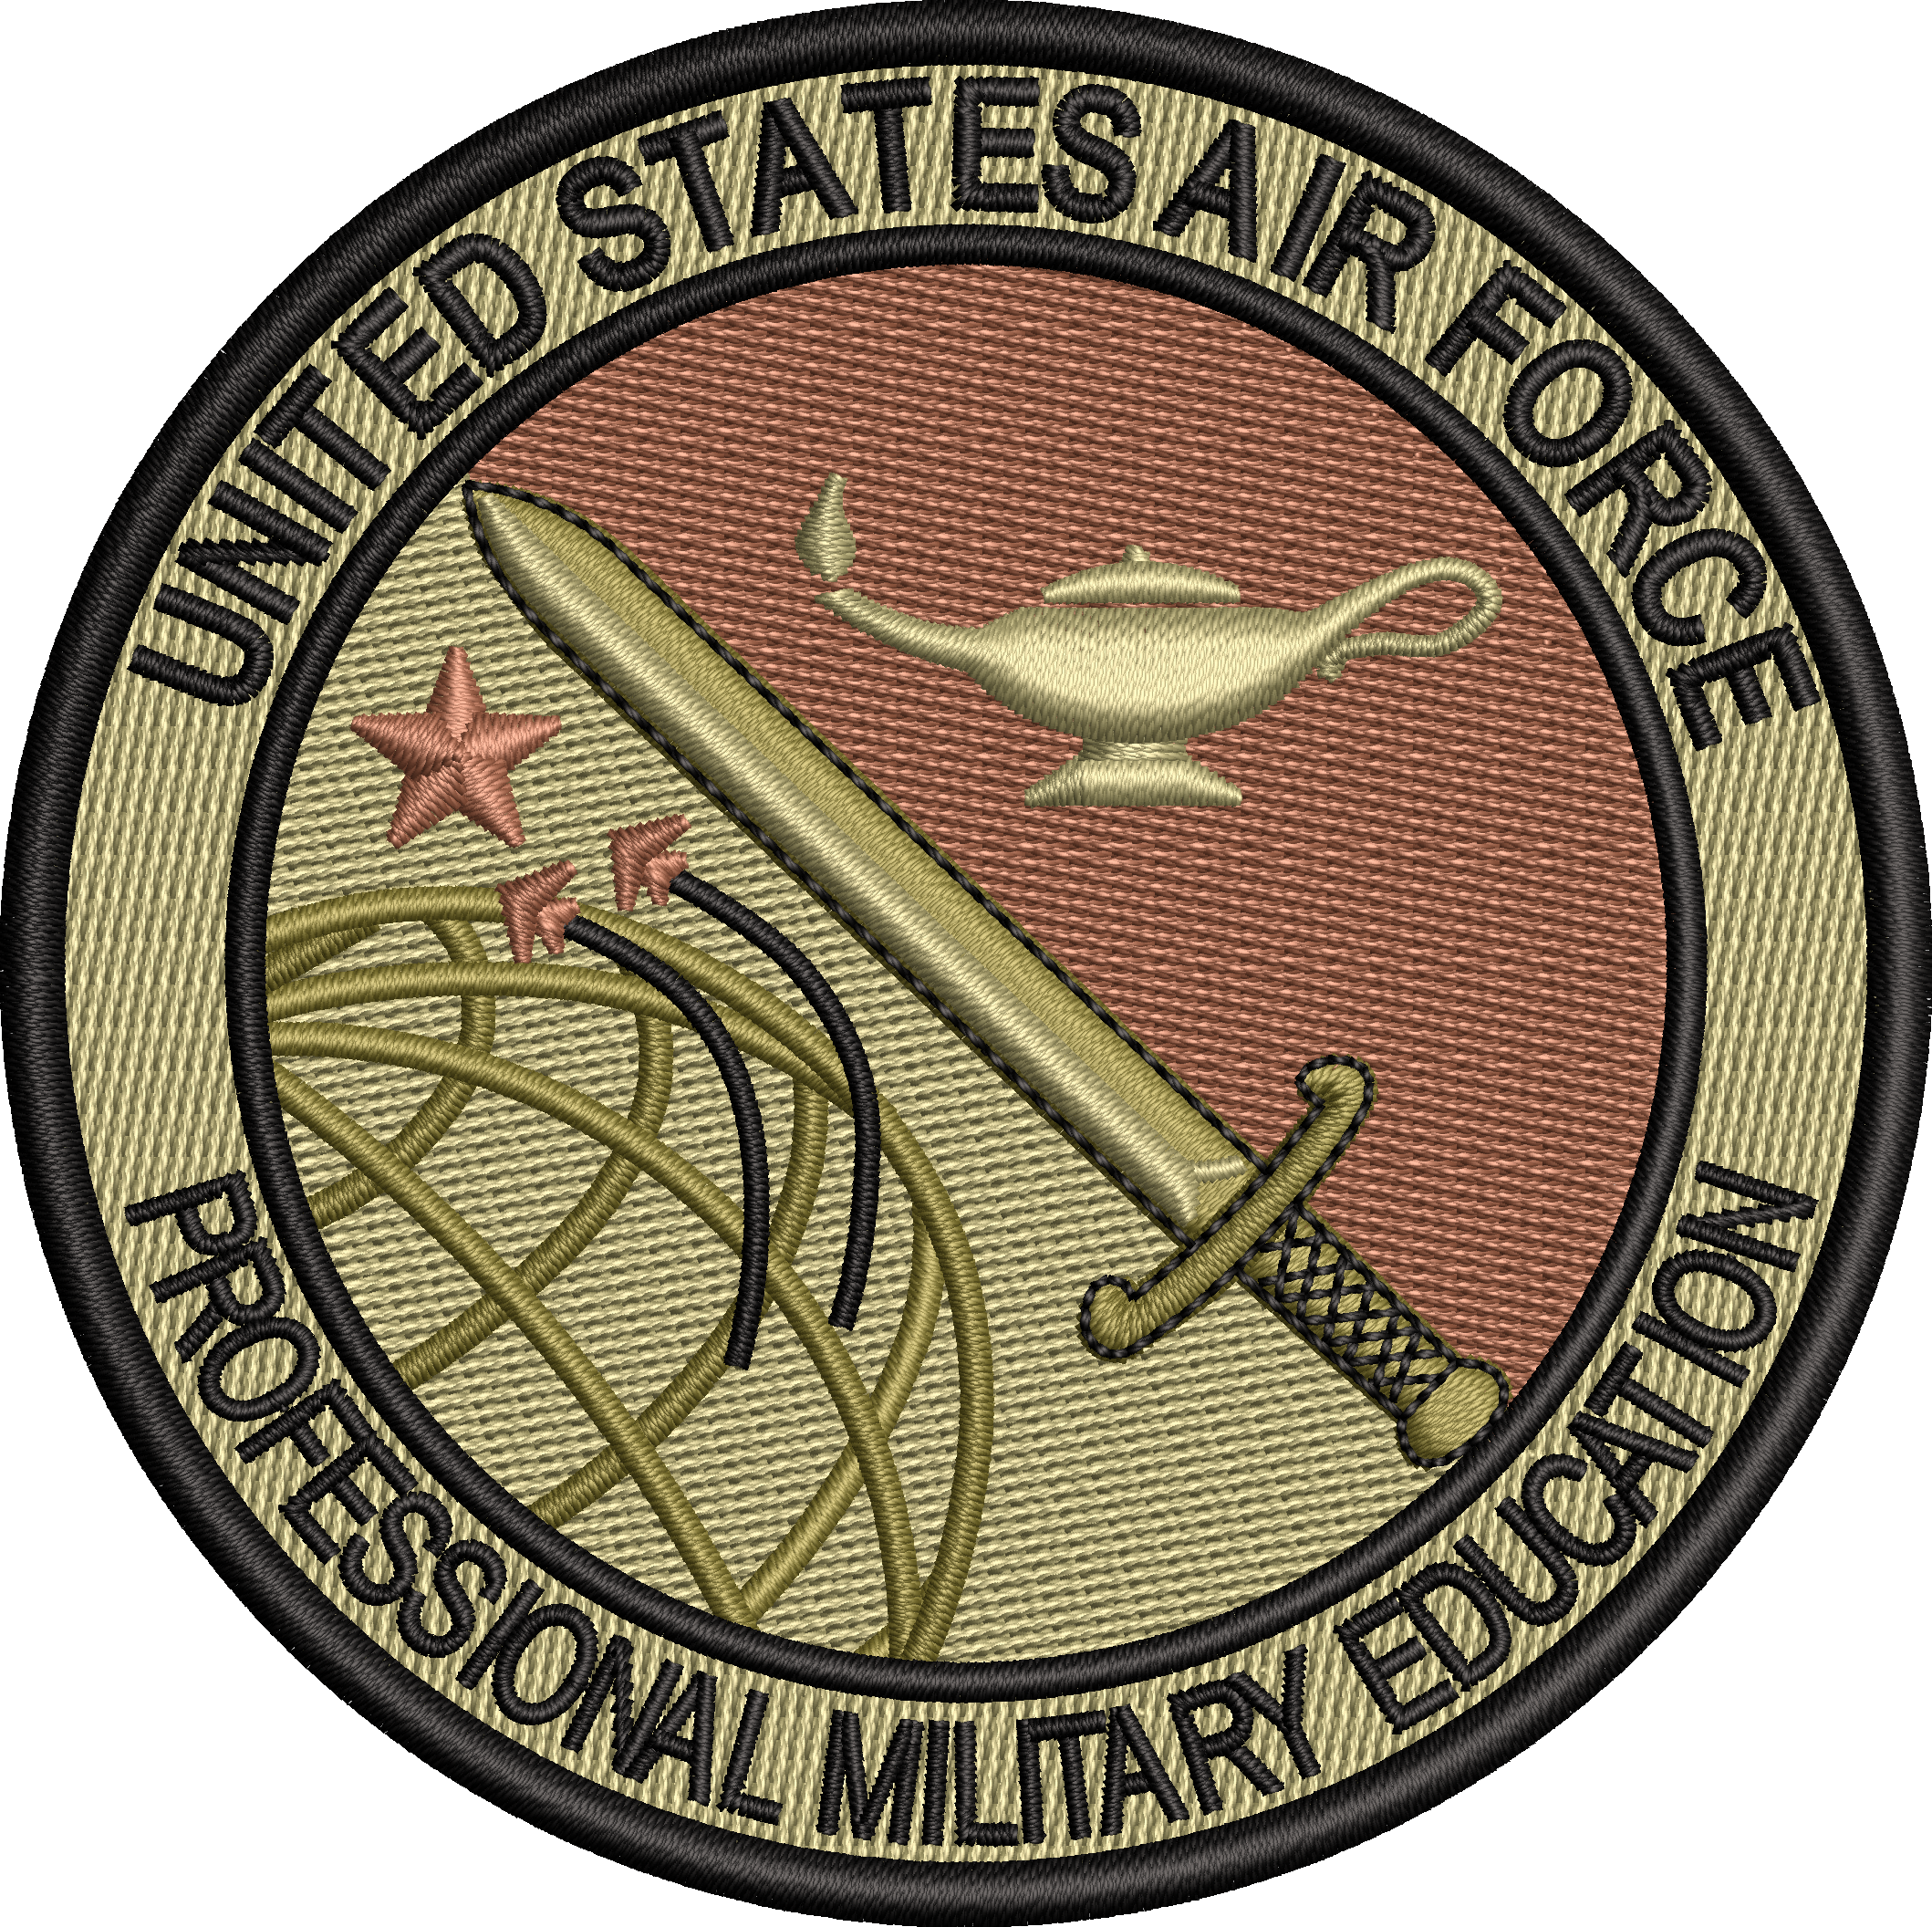 USAF Professional Military Education